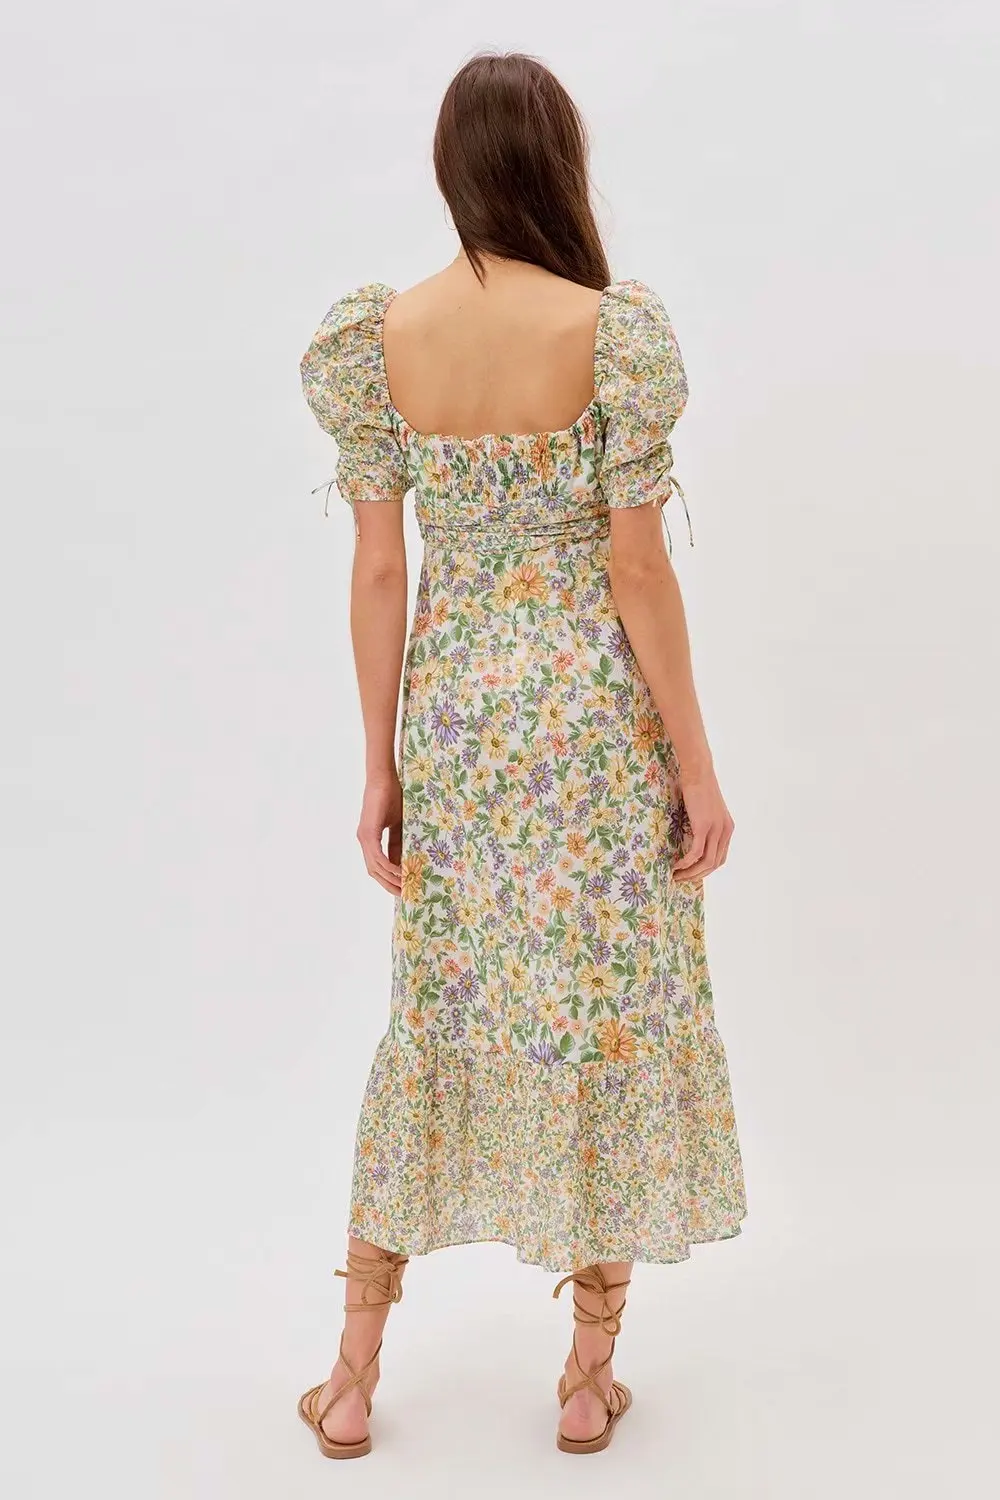 Girlfairy Elegant Fashion New Mini Dress Women Floral Print Ruffles Pu